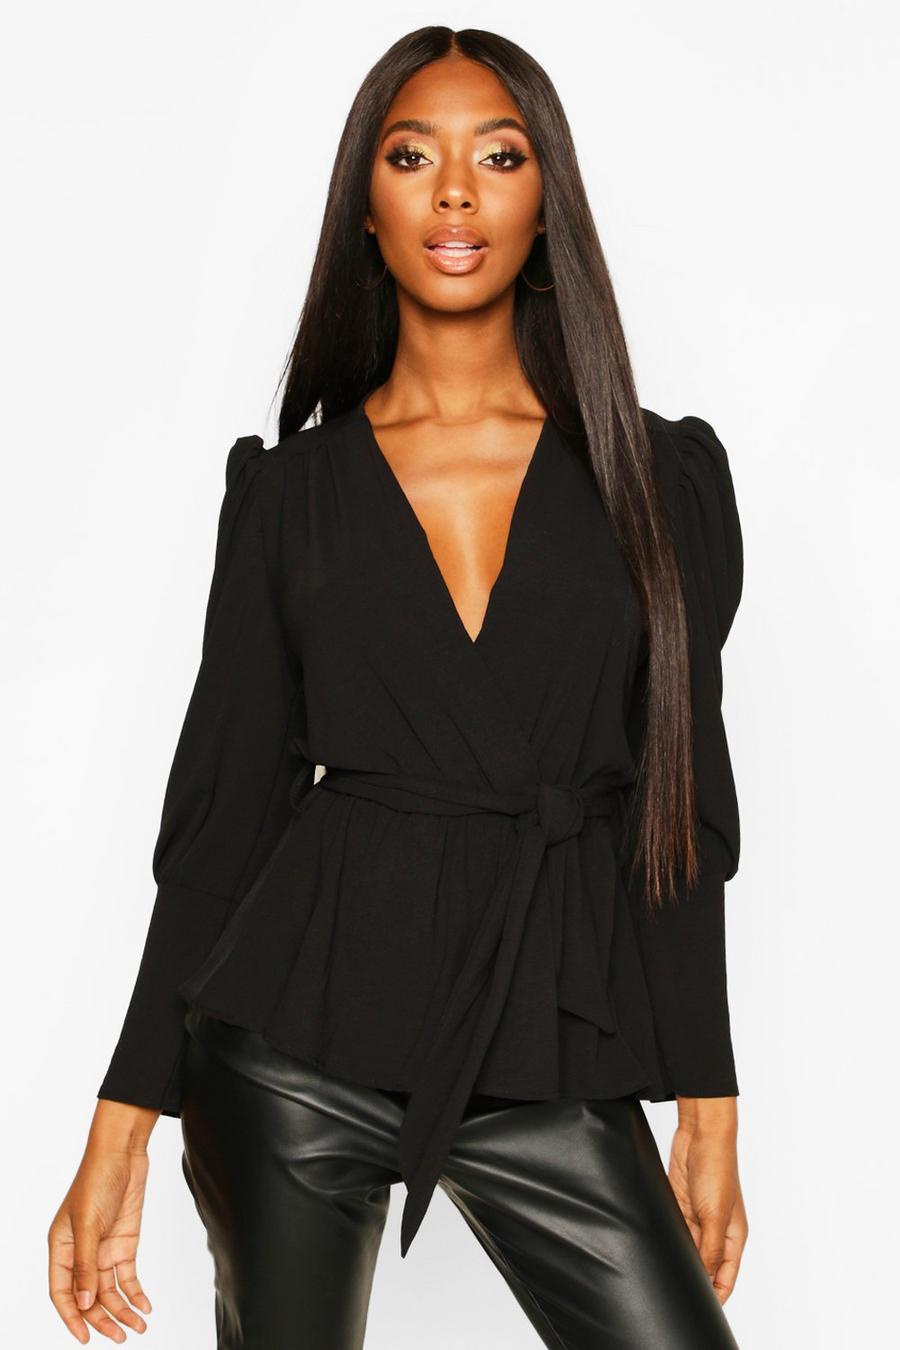 https://media.boohoo.com/i/boohoo/fzz75410_black_xl/female-black-puff-sleeve-wrap-blouse/?w=900&qlt=default&fmt.jp2.qlt=70&fmt=auto&sm=fit